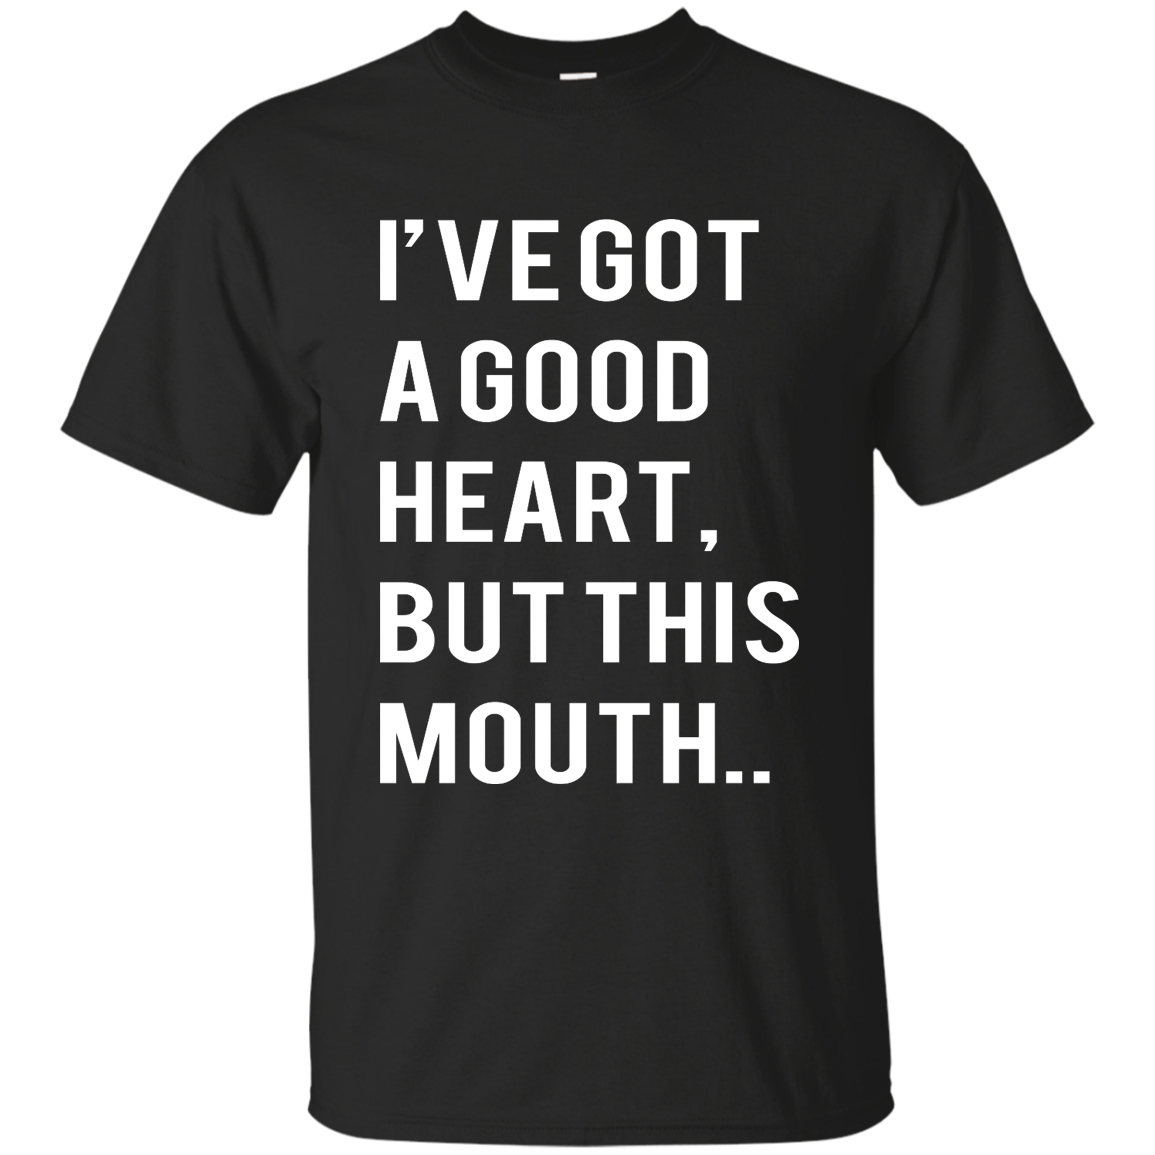 I've Got A Good Heart But This Mouth shirt, hoodie, tank